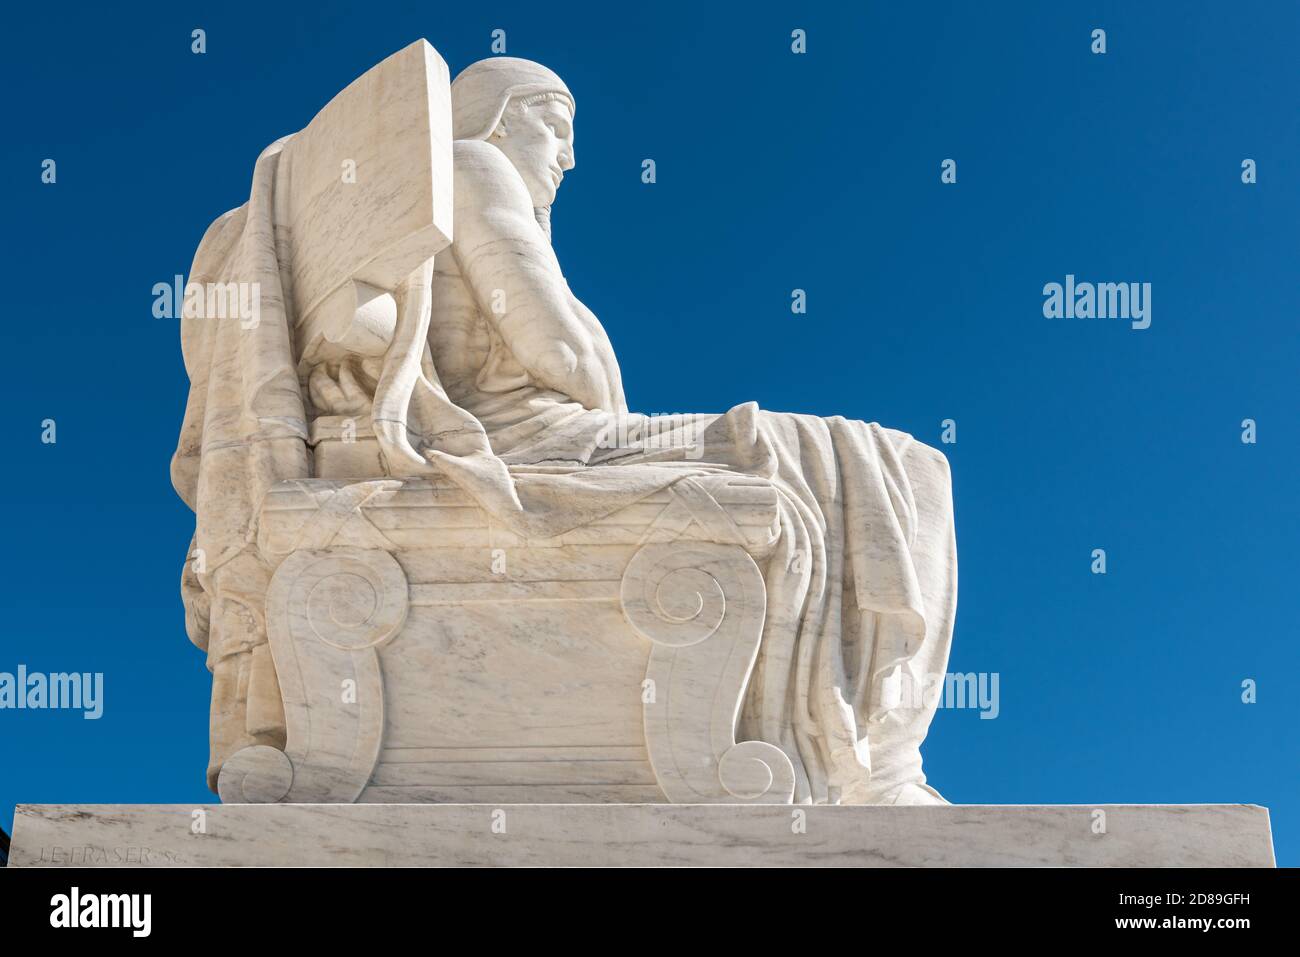 James Earle Frasers Statue "Authority of Law" des Obersten Gerichtshofs der USA auf dem Capitol Hill in Washington DC. Stockfoto